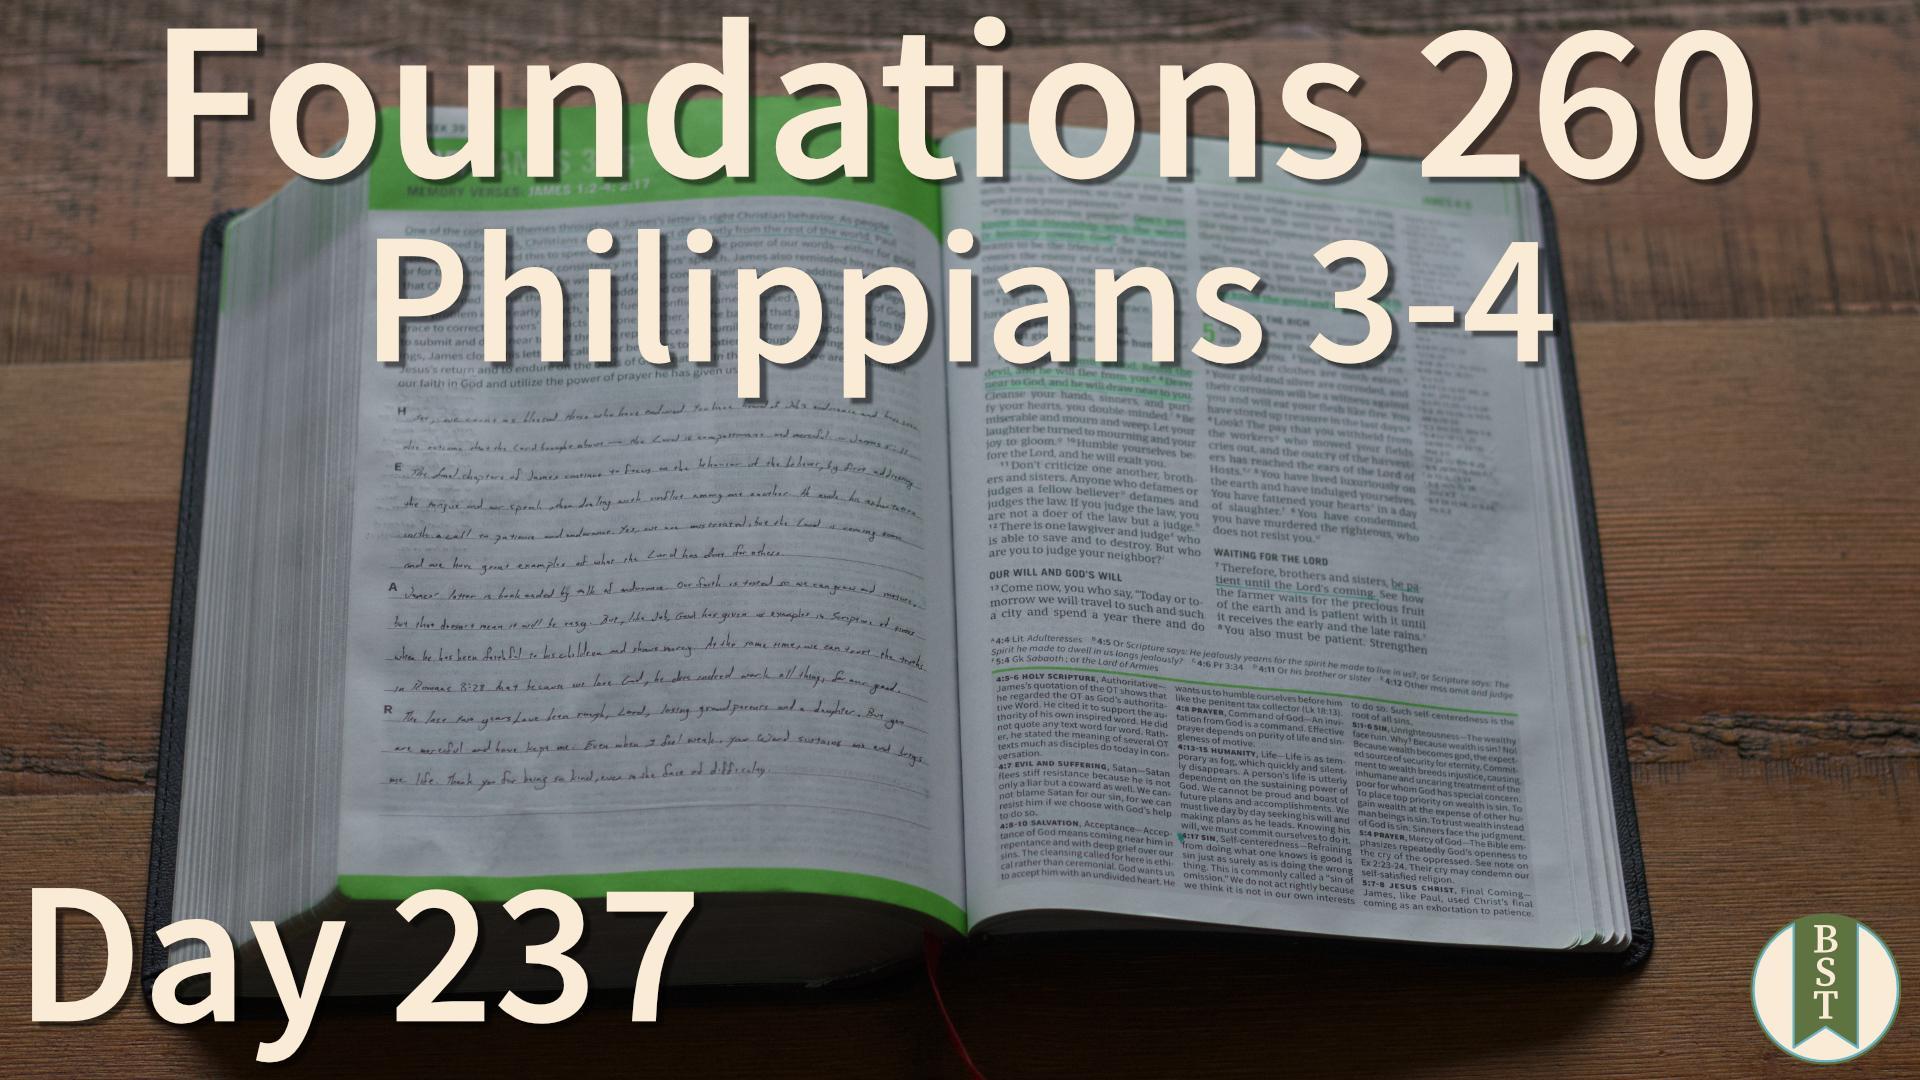 F260 Day 237: Philippians 3-4